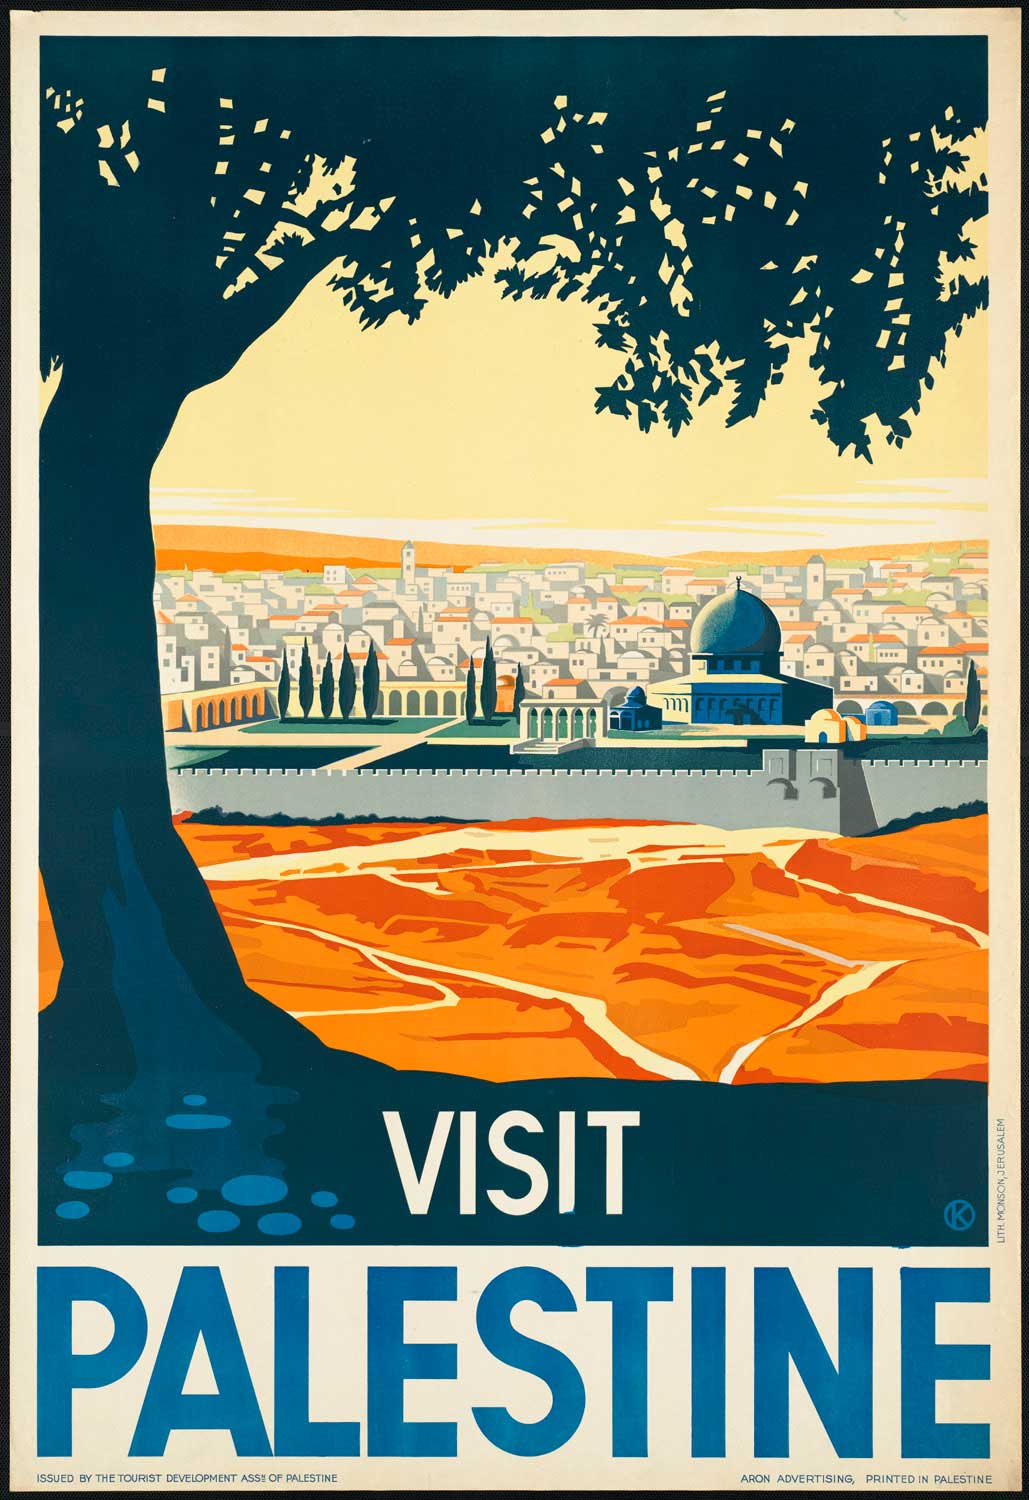 Kitten Vintage: 13 Stunning 1930s orange and blue travel posters